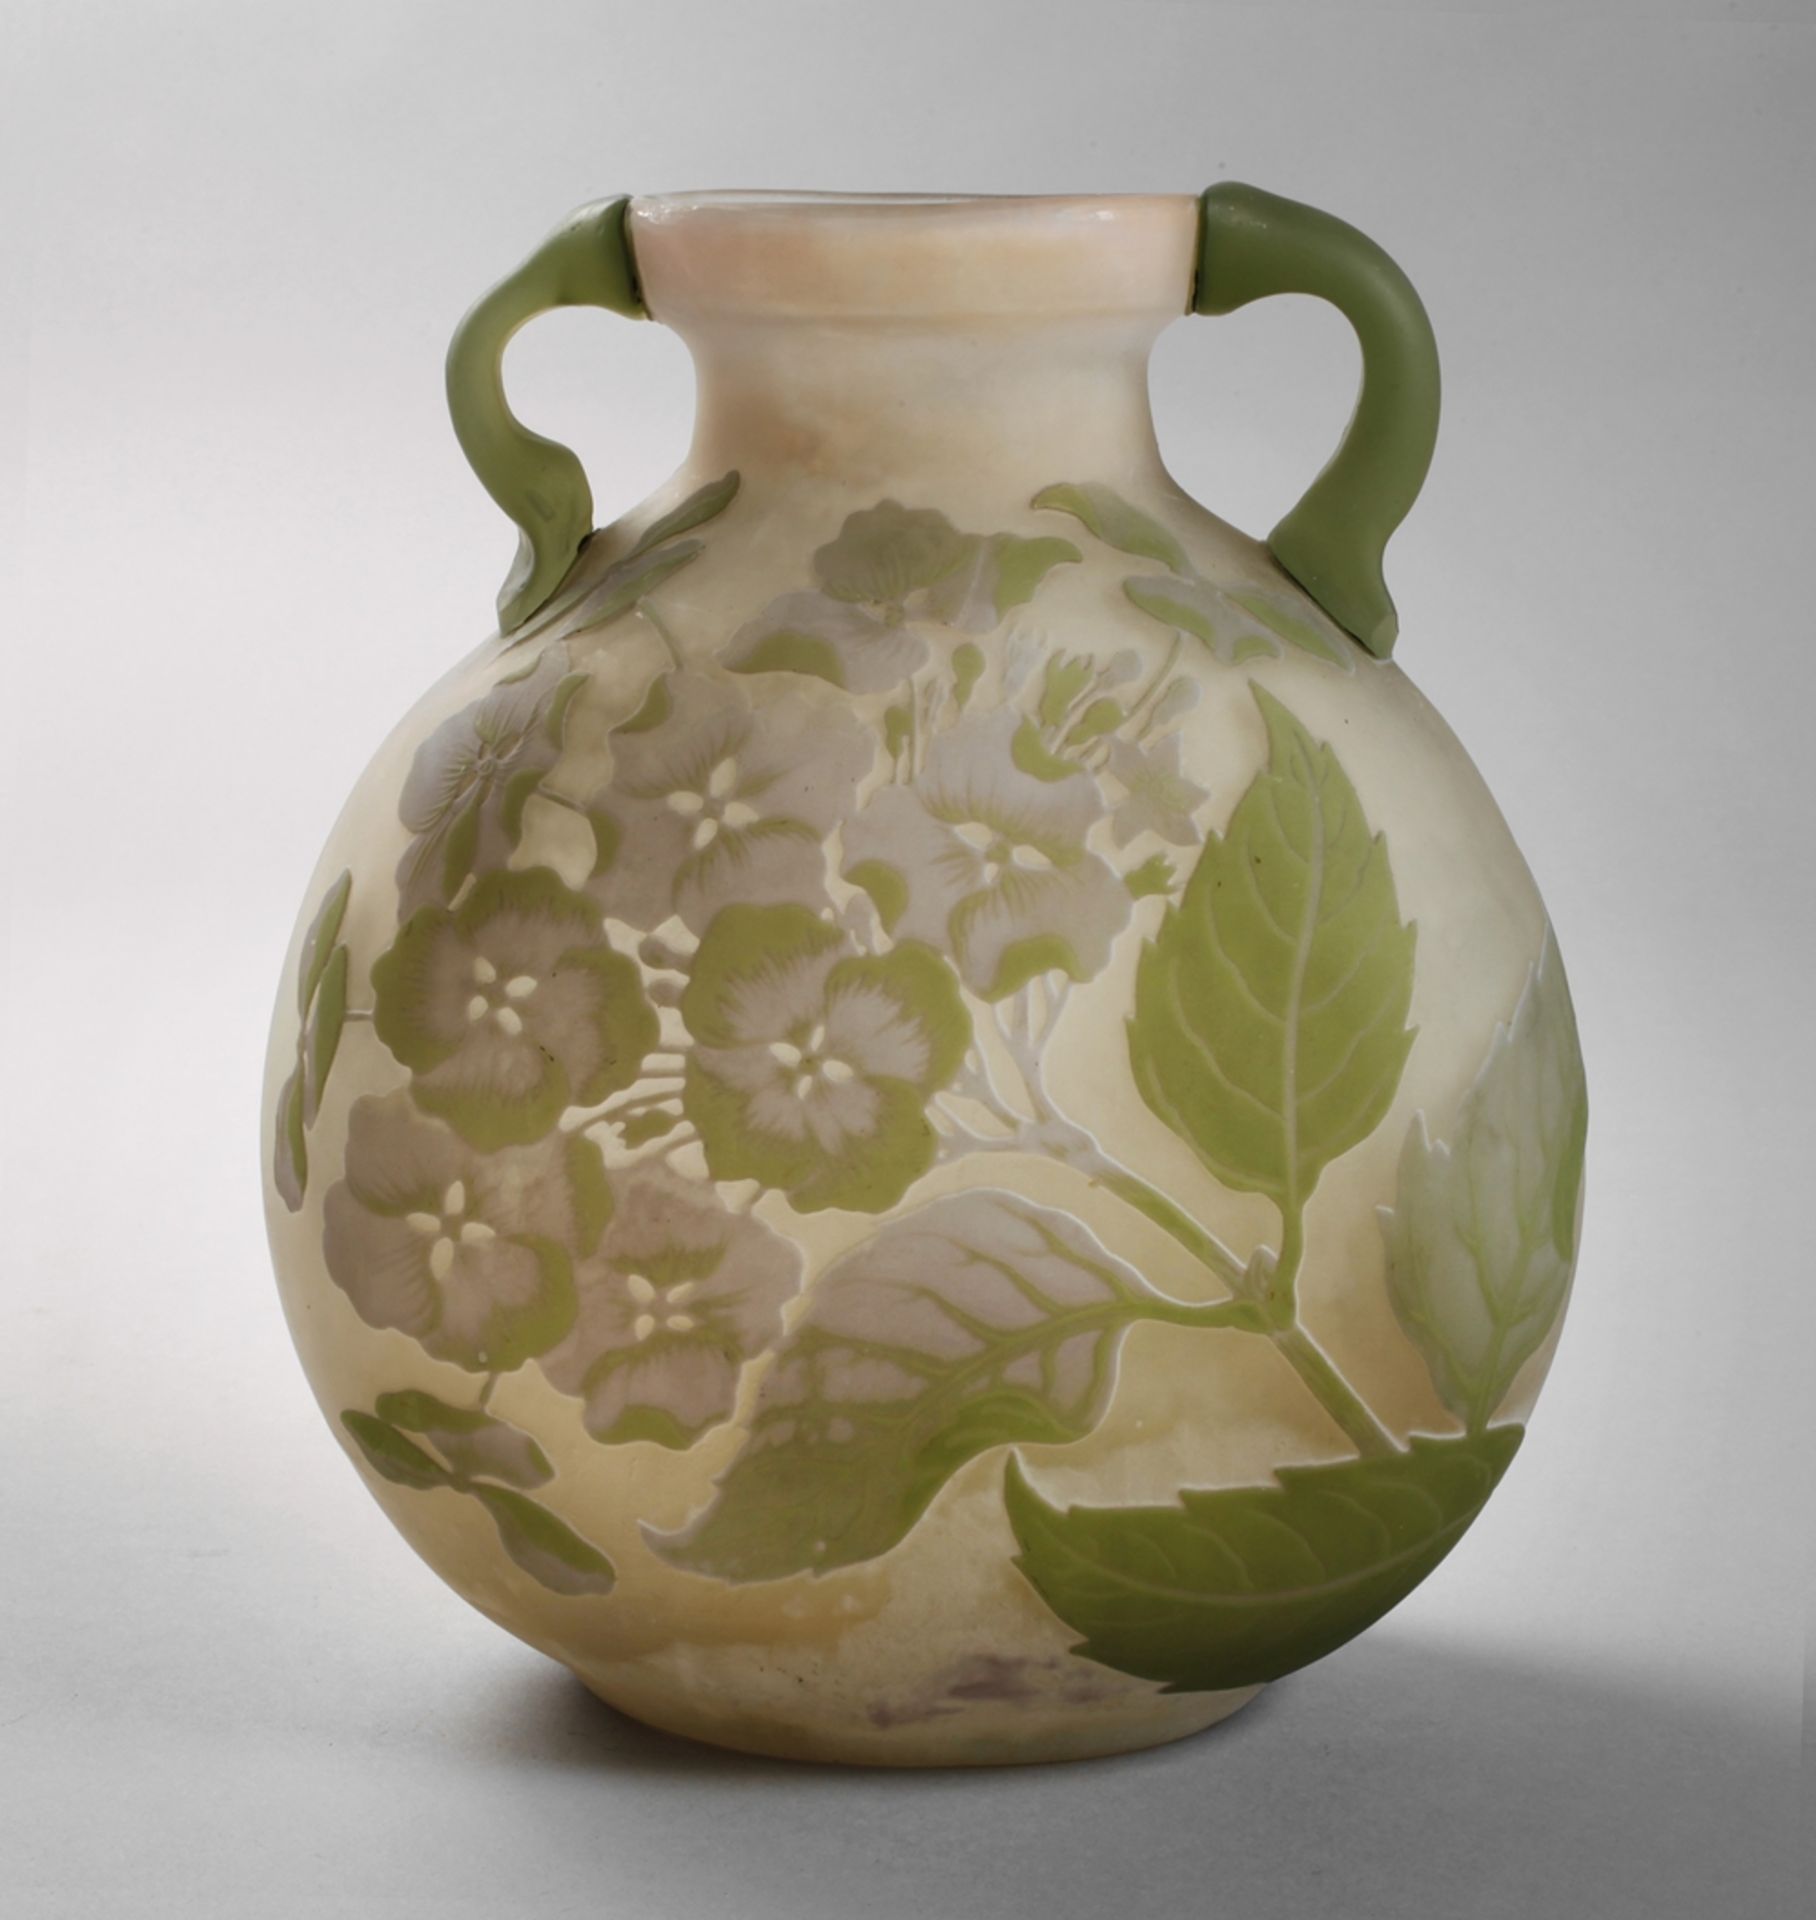 Handled vase Émile Gallé